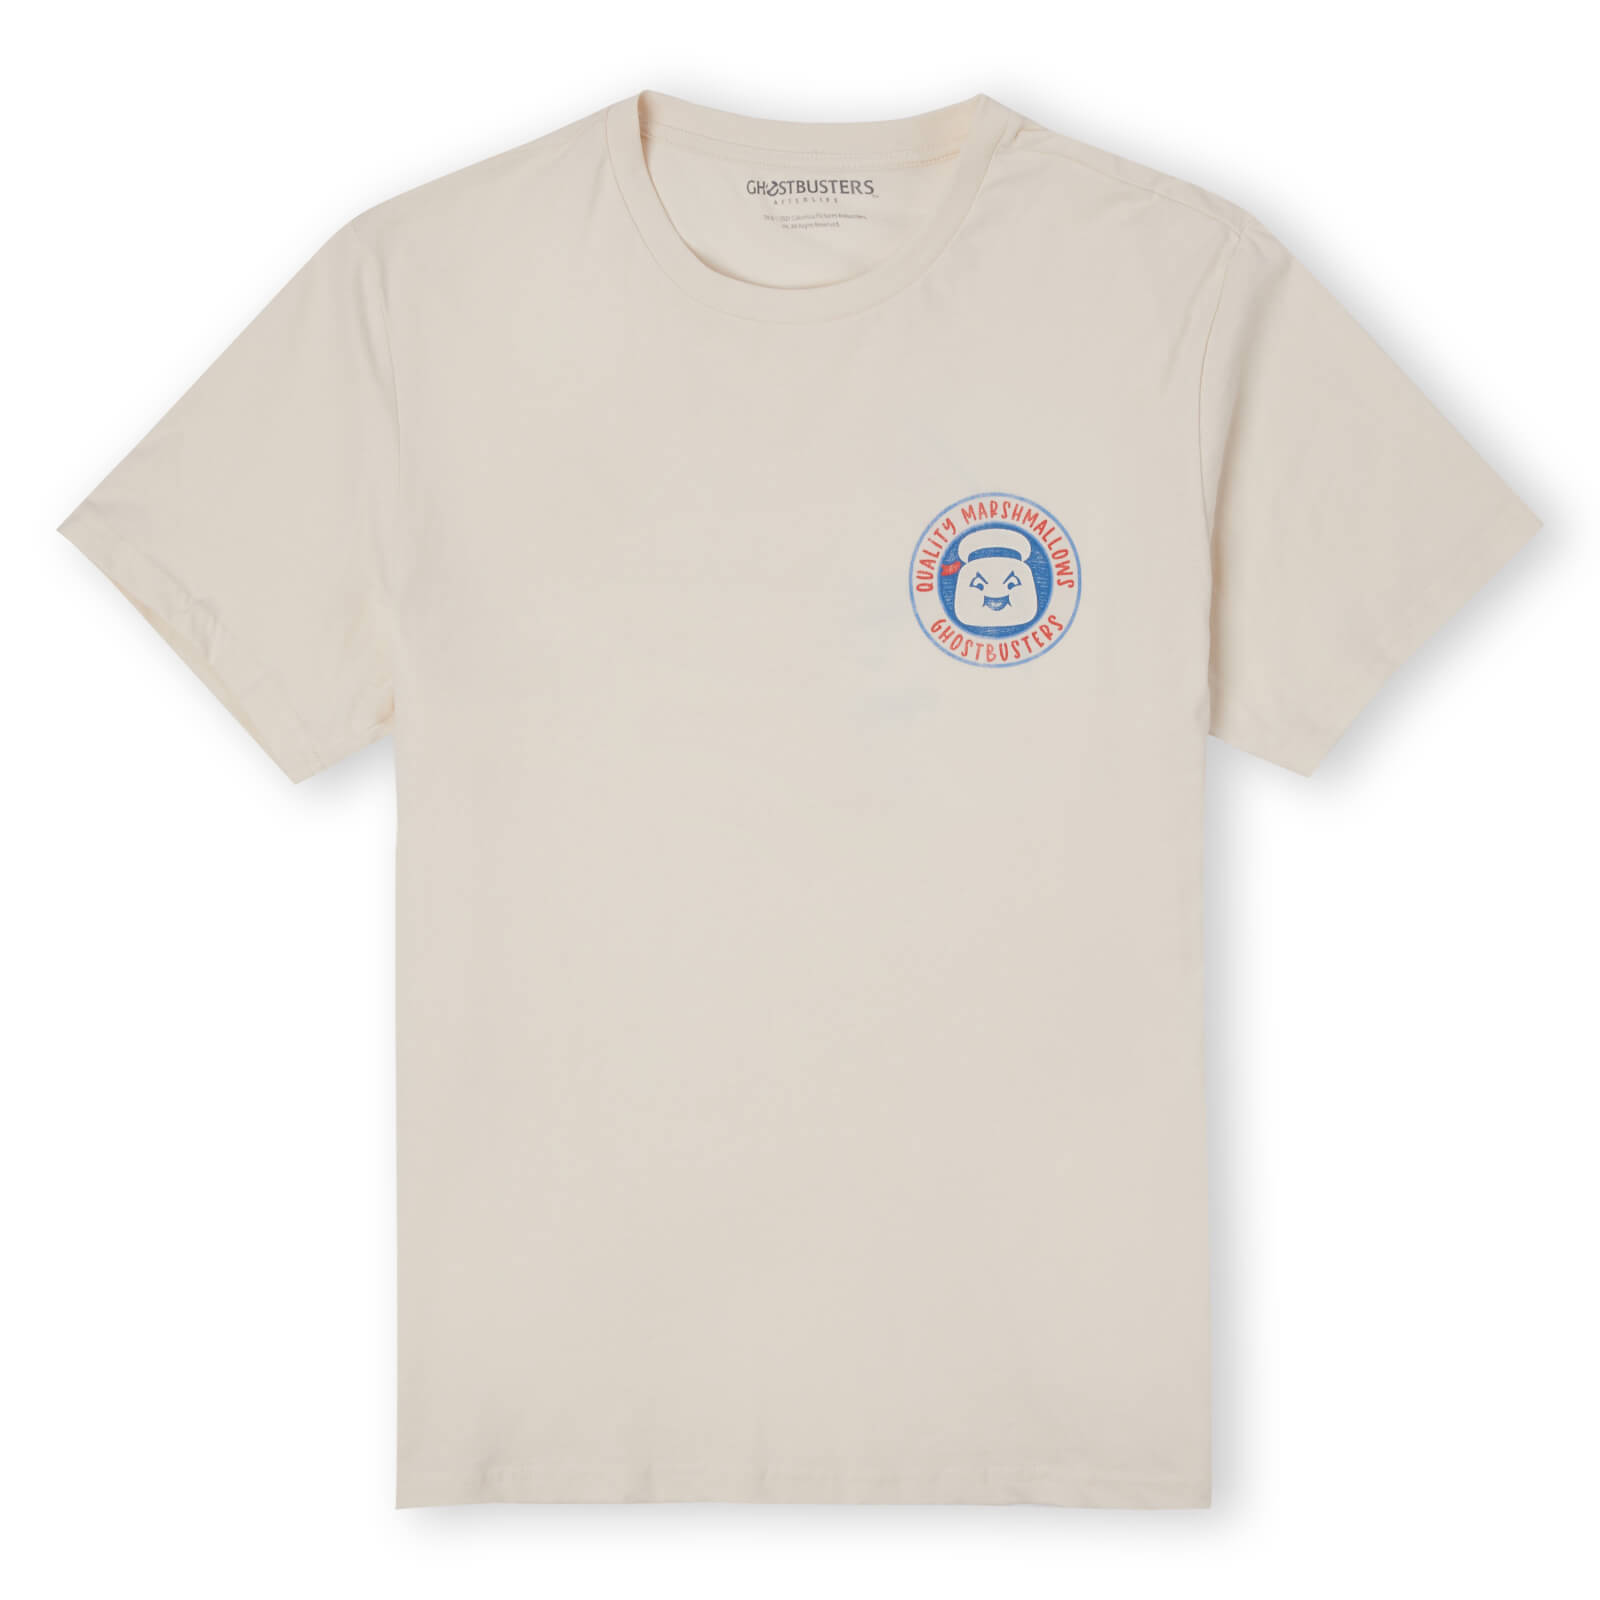 Ghostbusters Evil Marshmallow Unisex T-Shirt - Cream - XXL - Crema